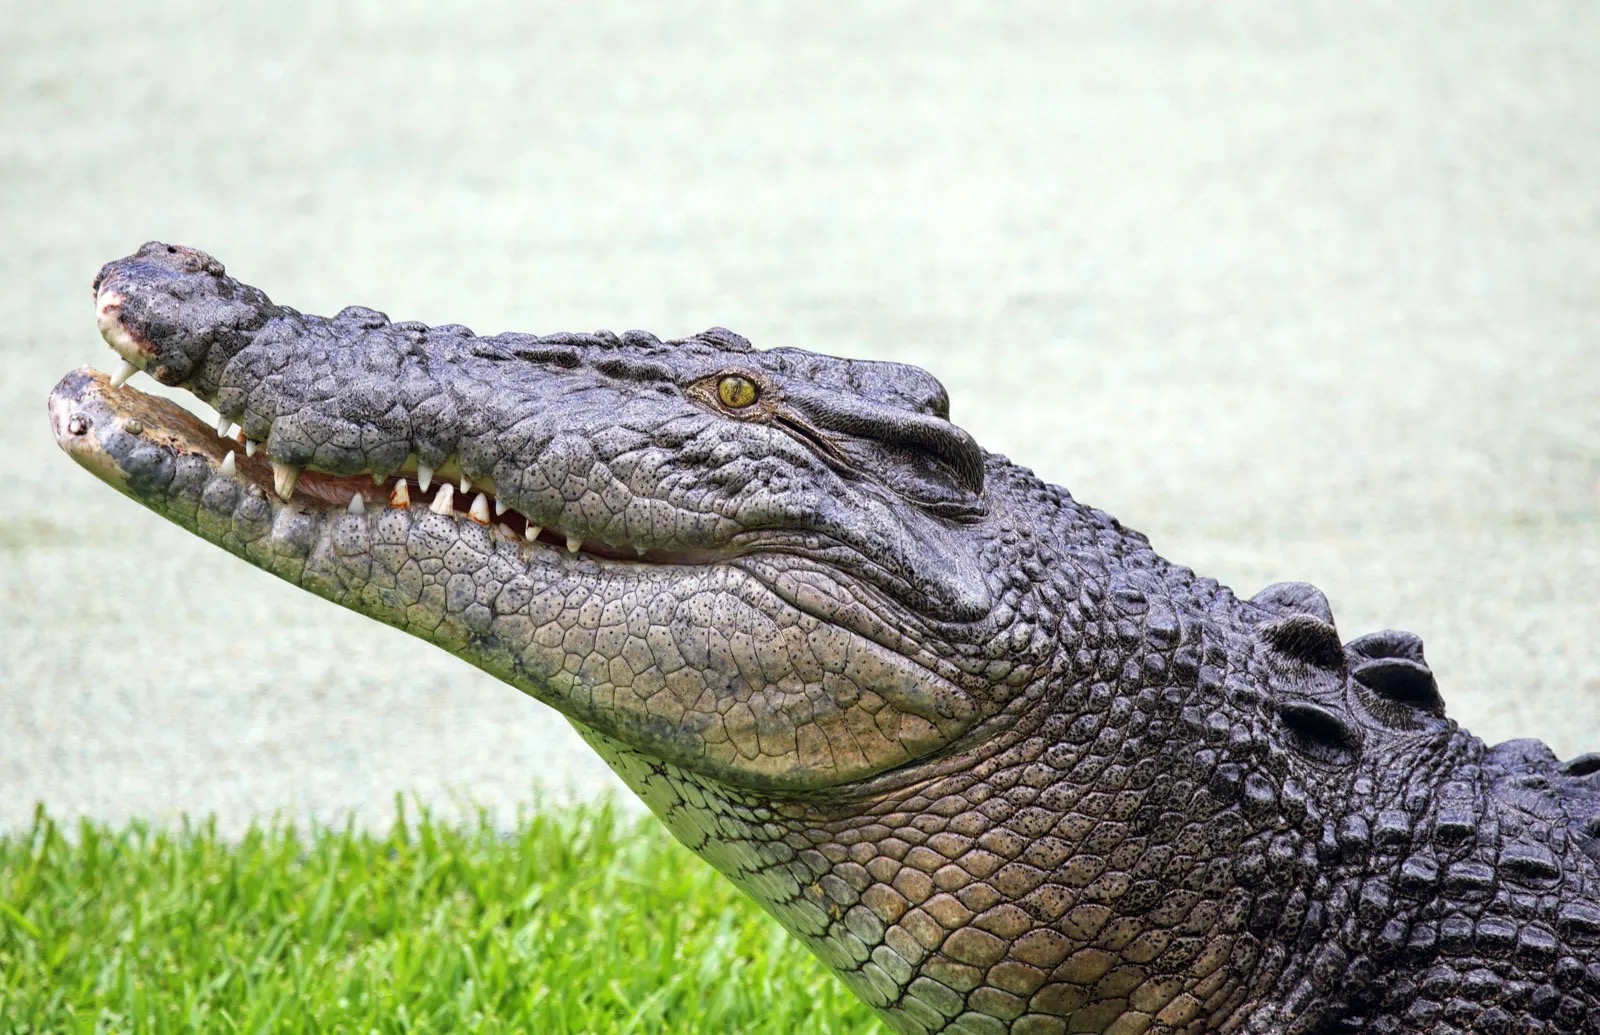 Second Largest Animals Quiz Saltwater crocodile